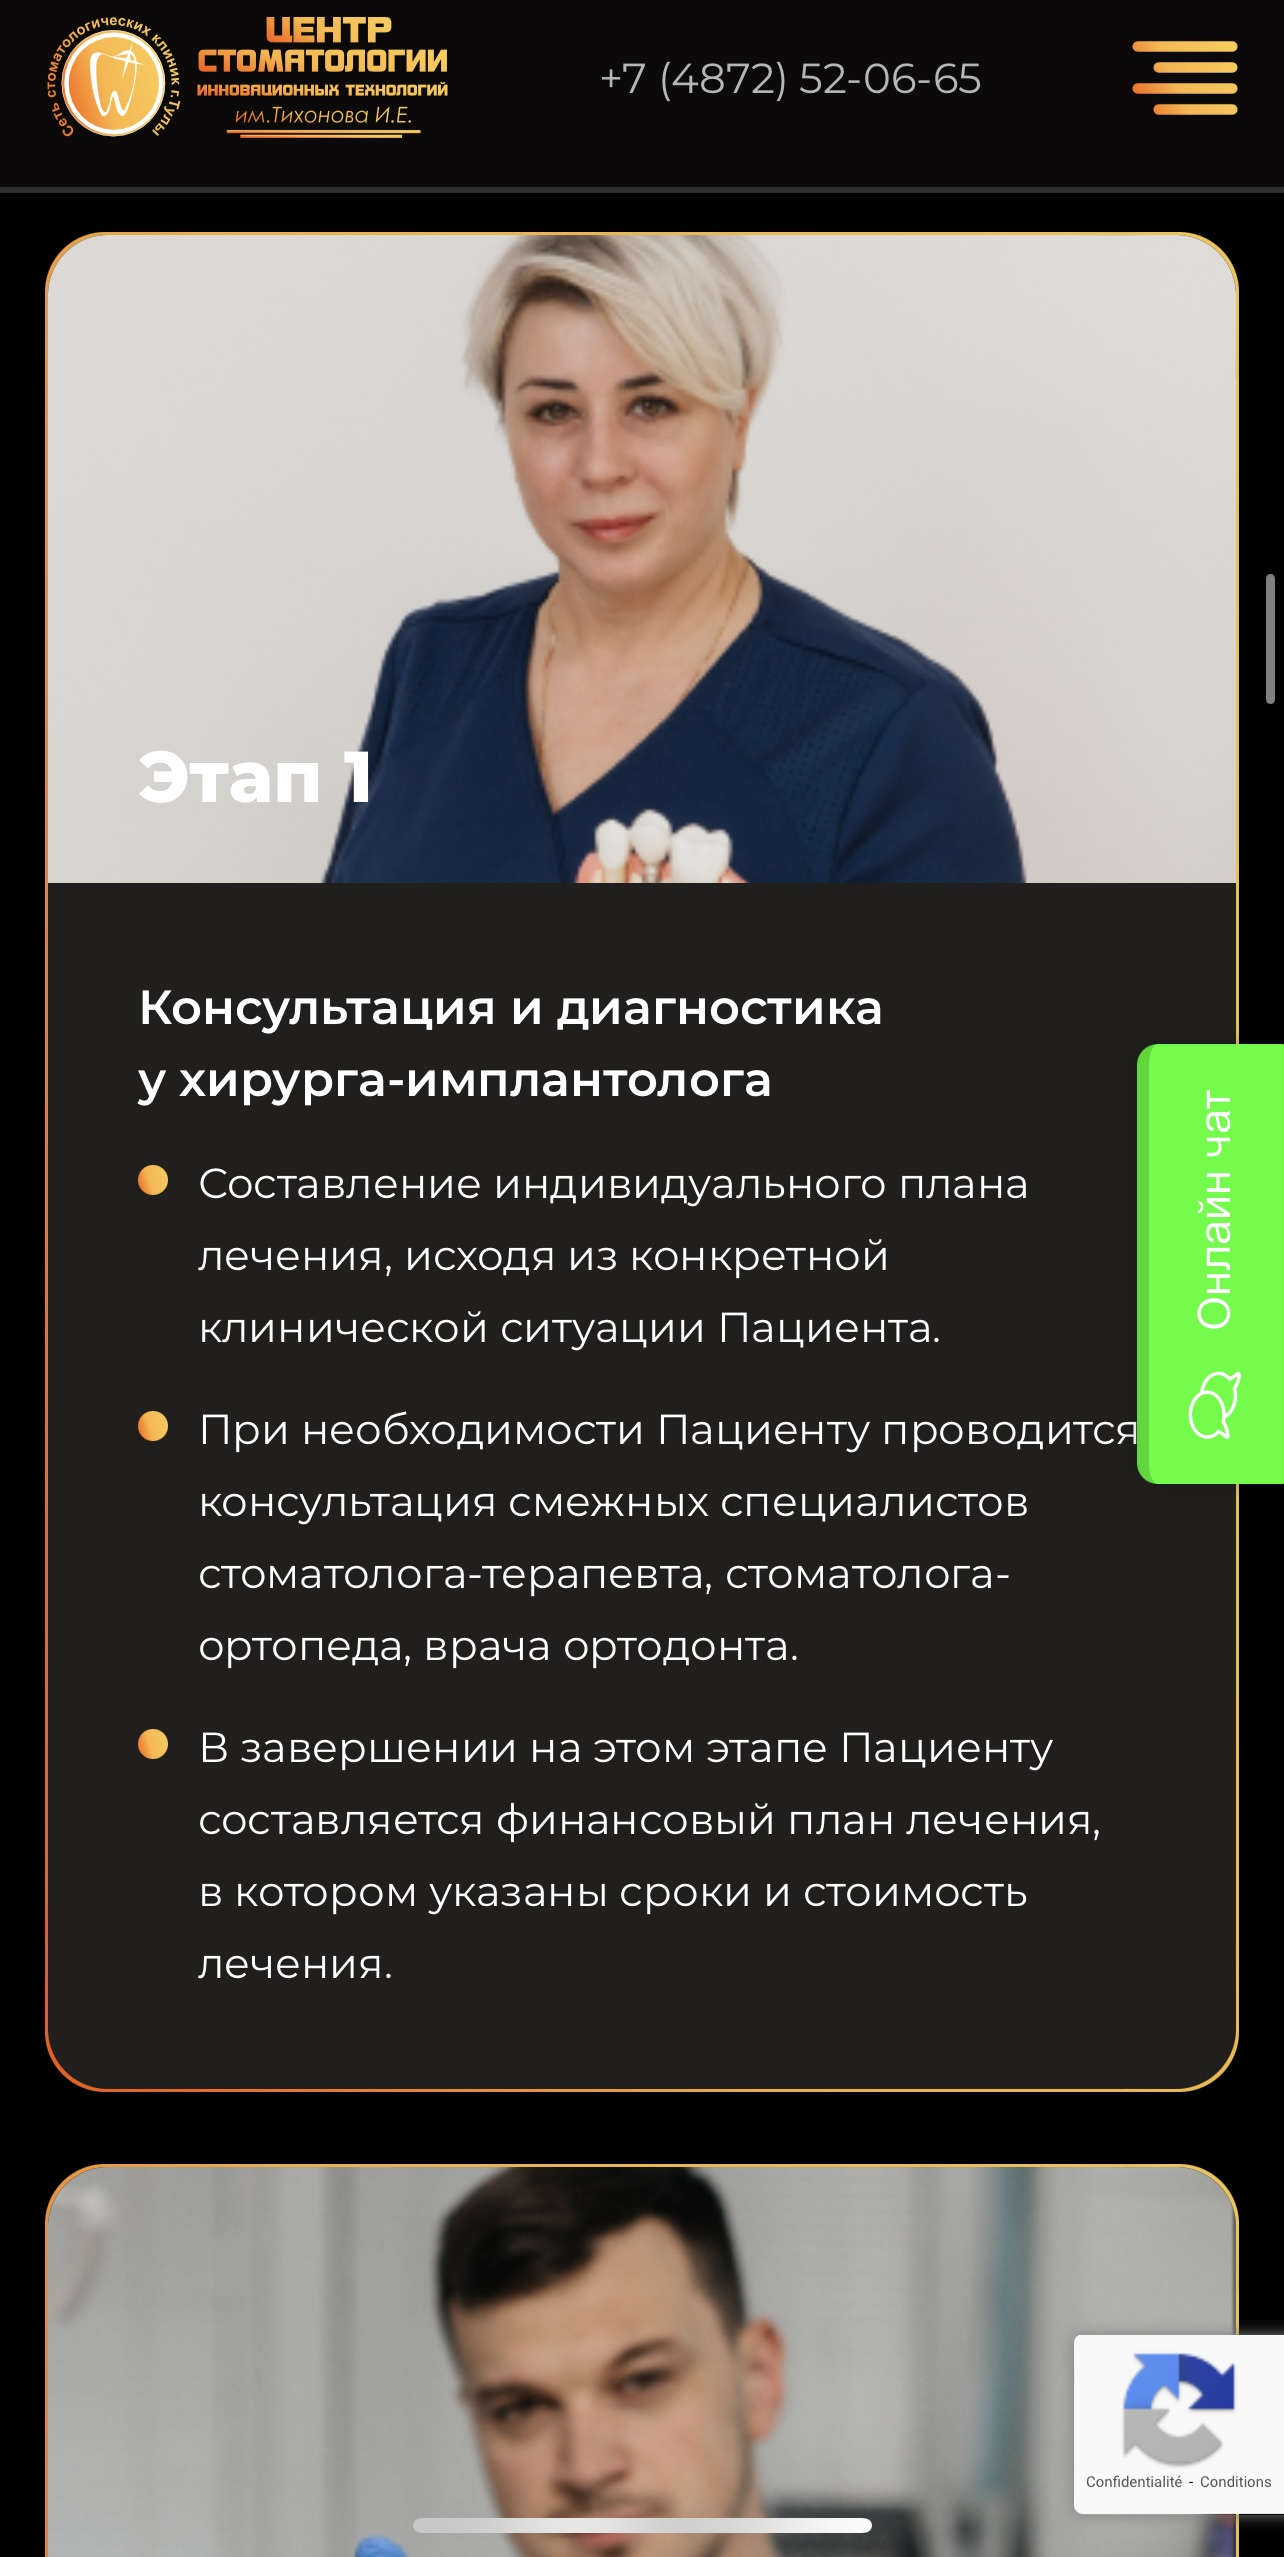 implantnobel.tuladent.ru / Специалисты